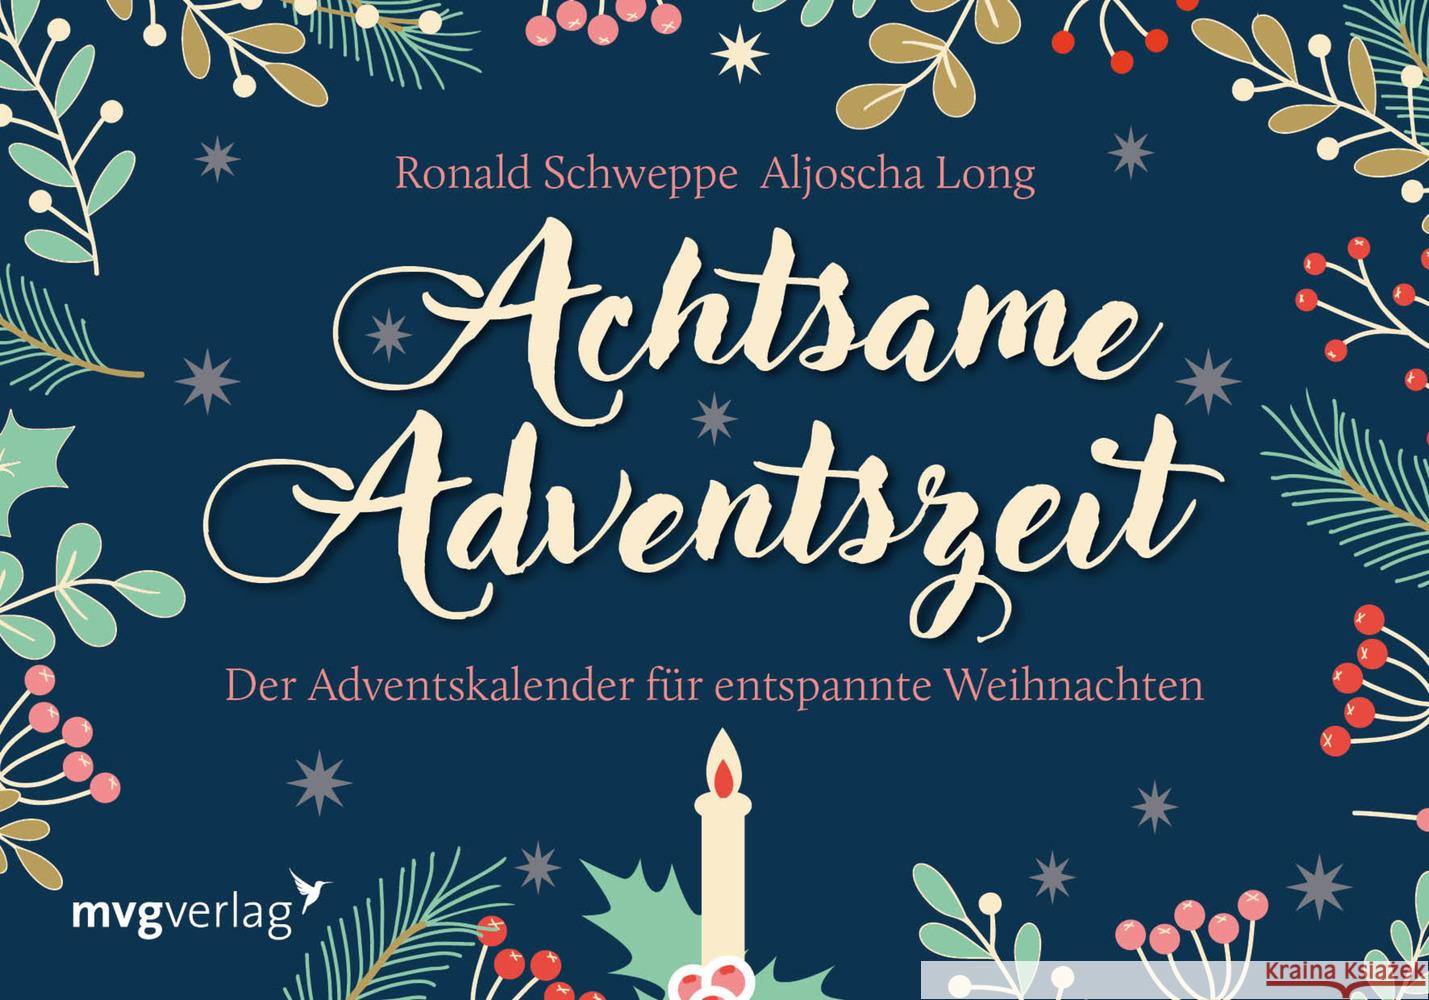 Achtsame Adventszeit Schweppe, Ronald Pierre; Long, Aljoscha 9783747402283